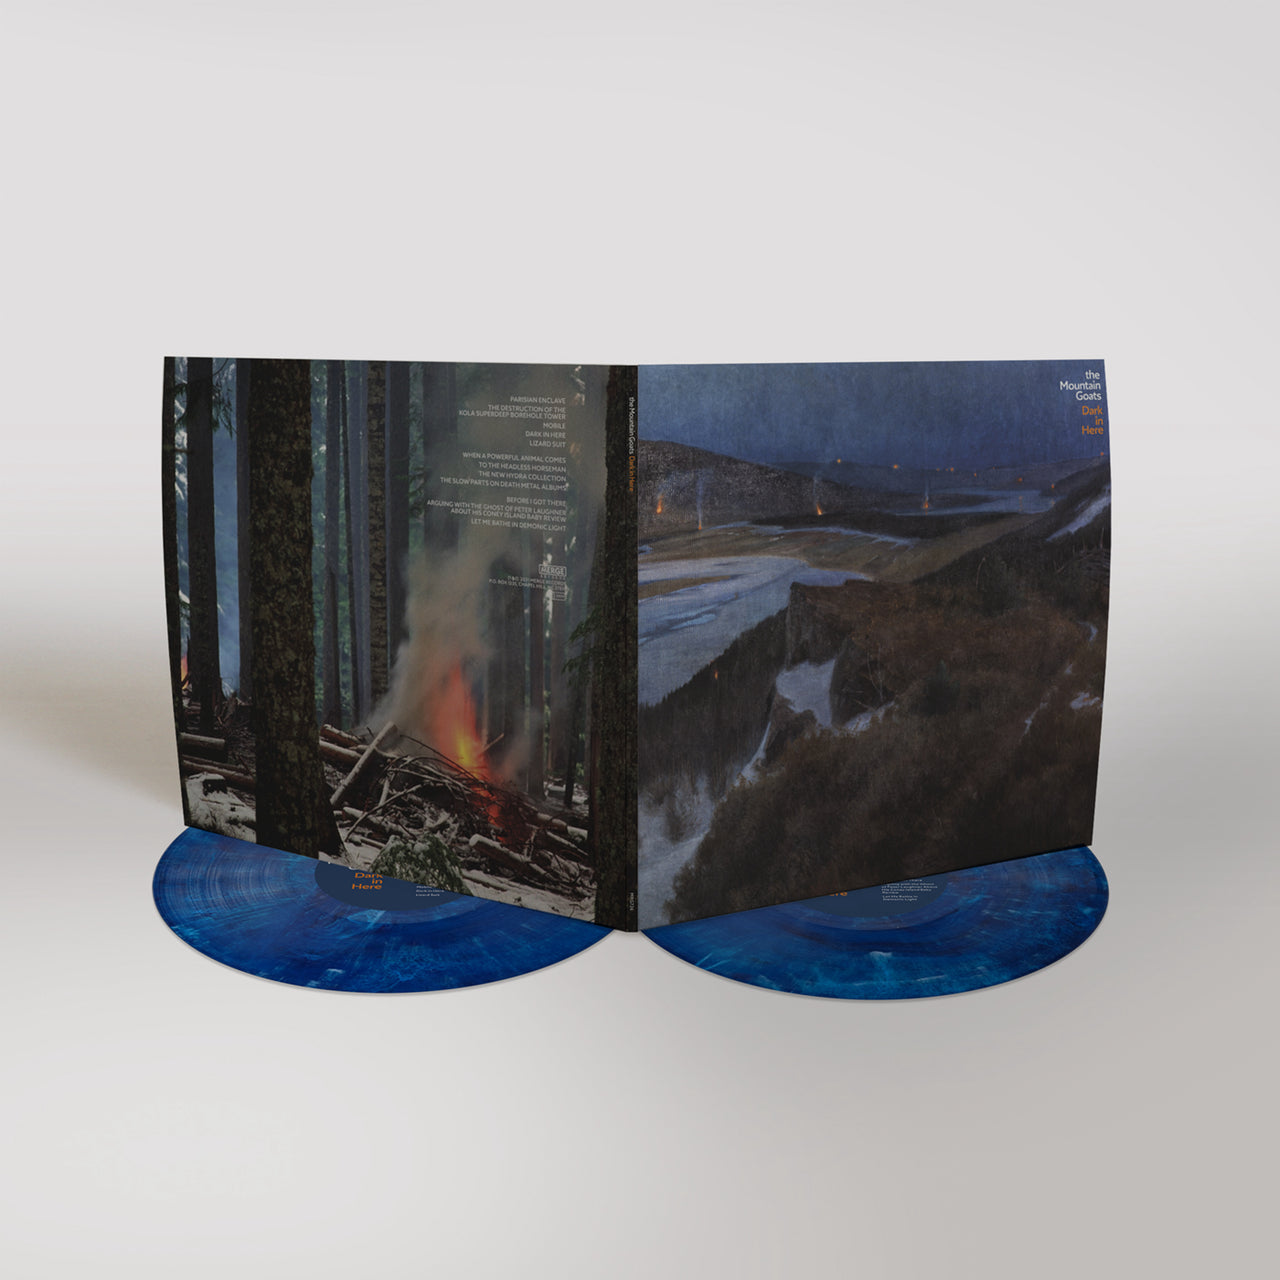 The Mountain Goats: Dark In Here Vinyl LP (Blue)